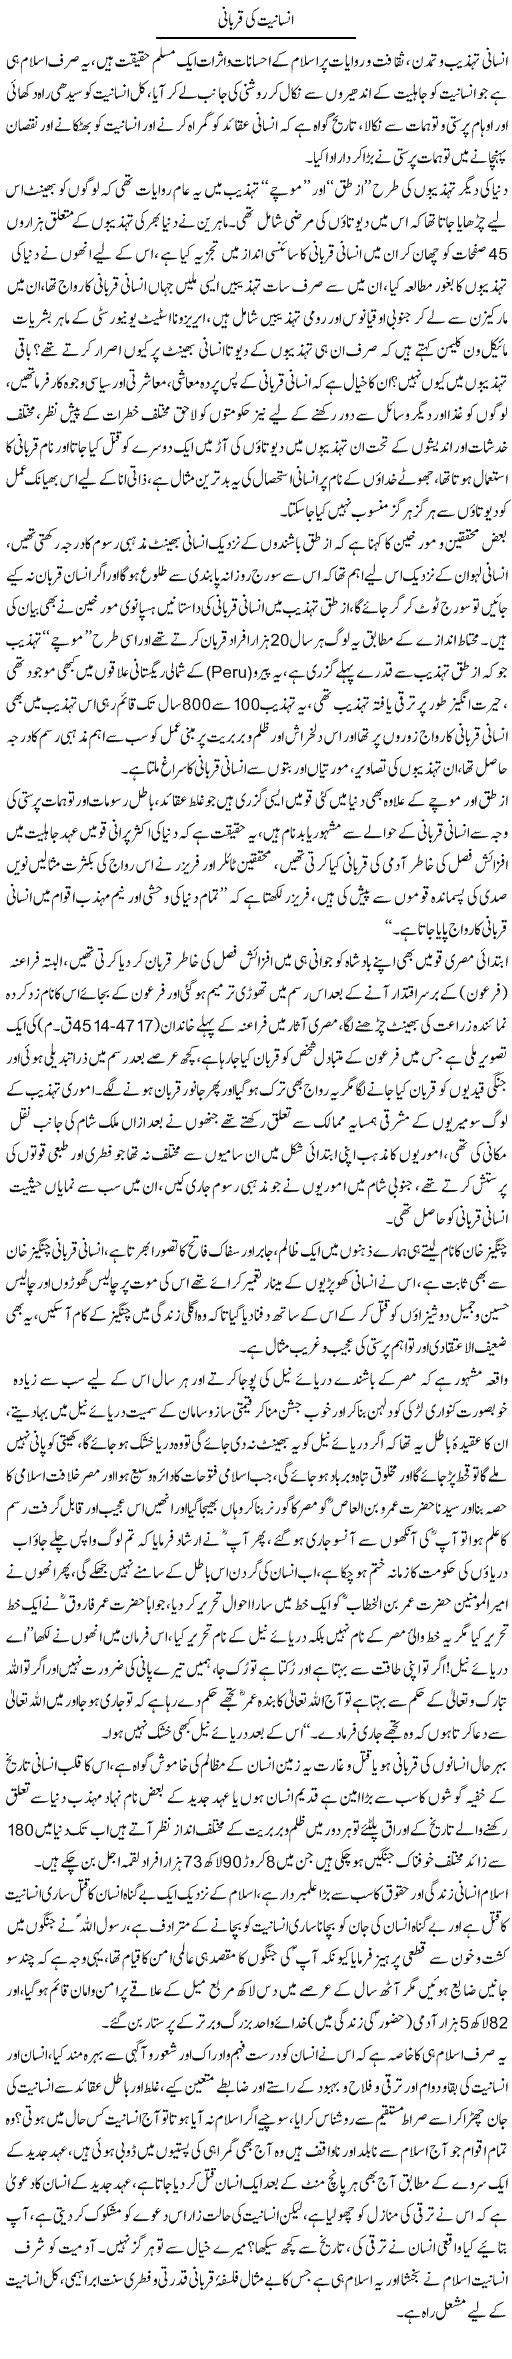 Insaaniyat Ki Qurbani | Dr. Muhammad Tayyab Khan Singhanvi | Daily Urdu Columns